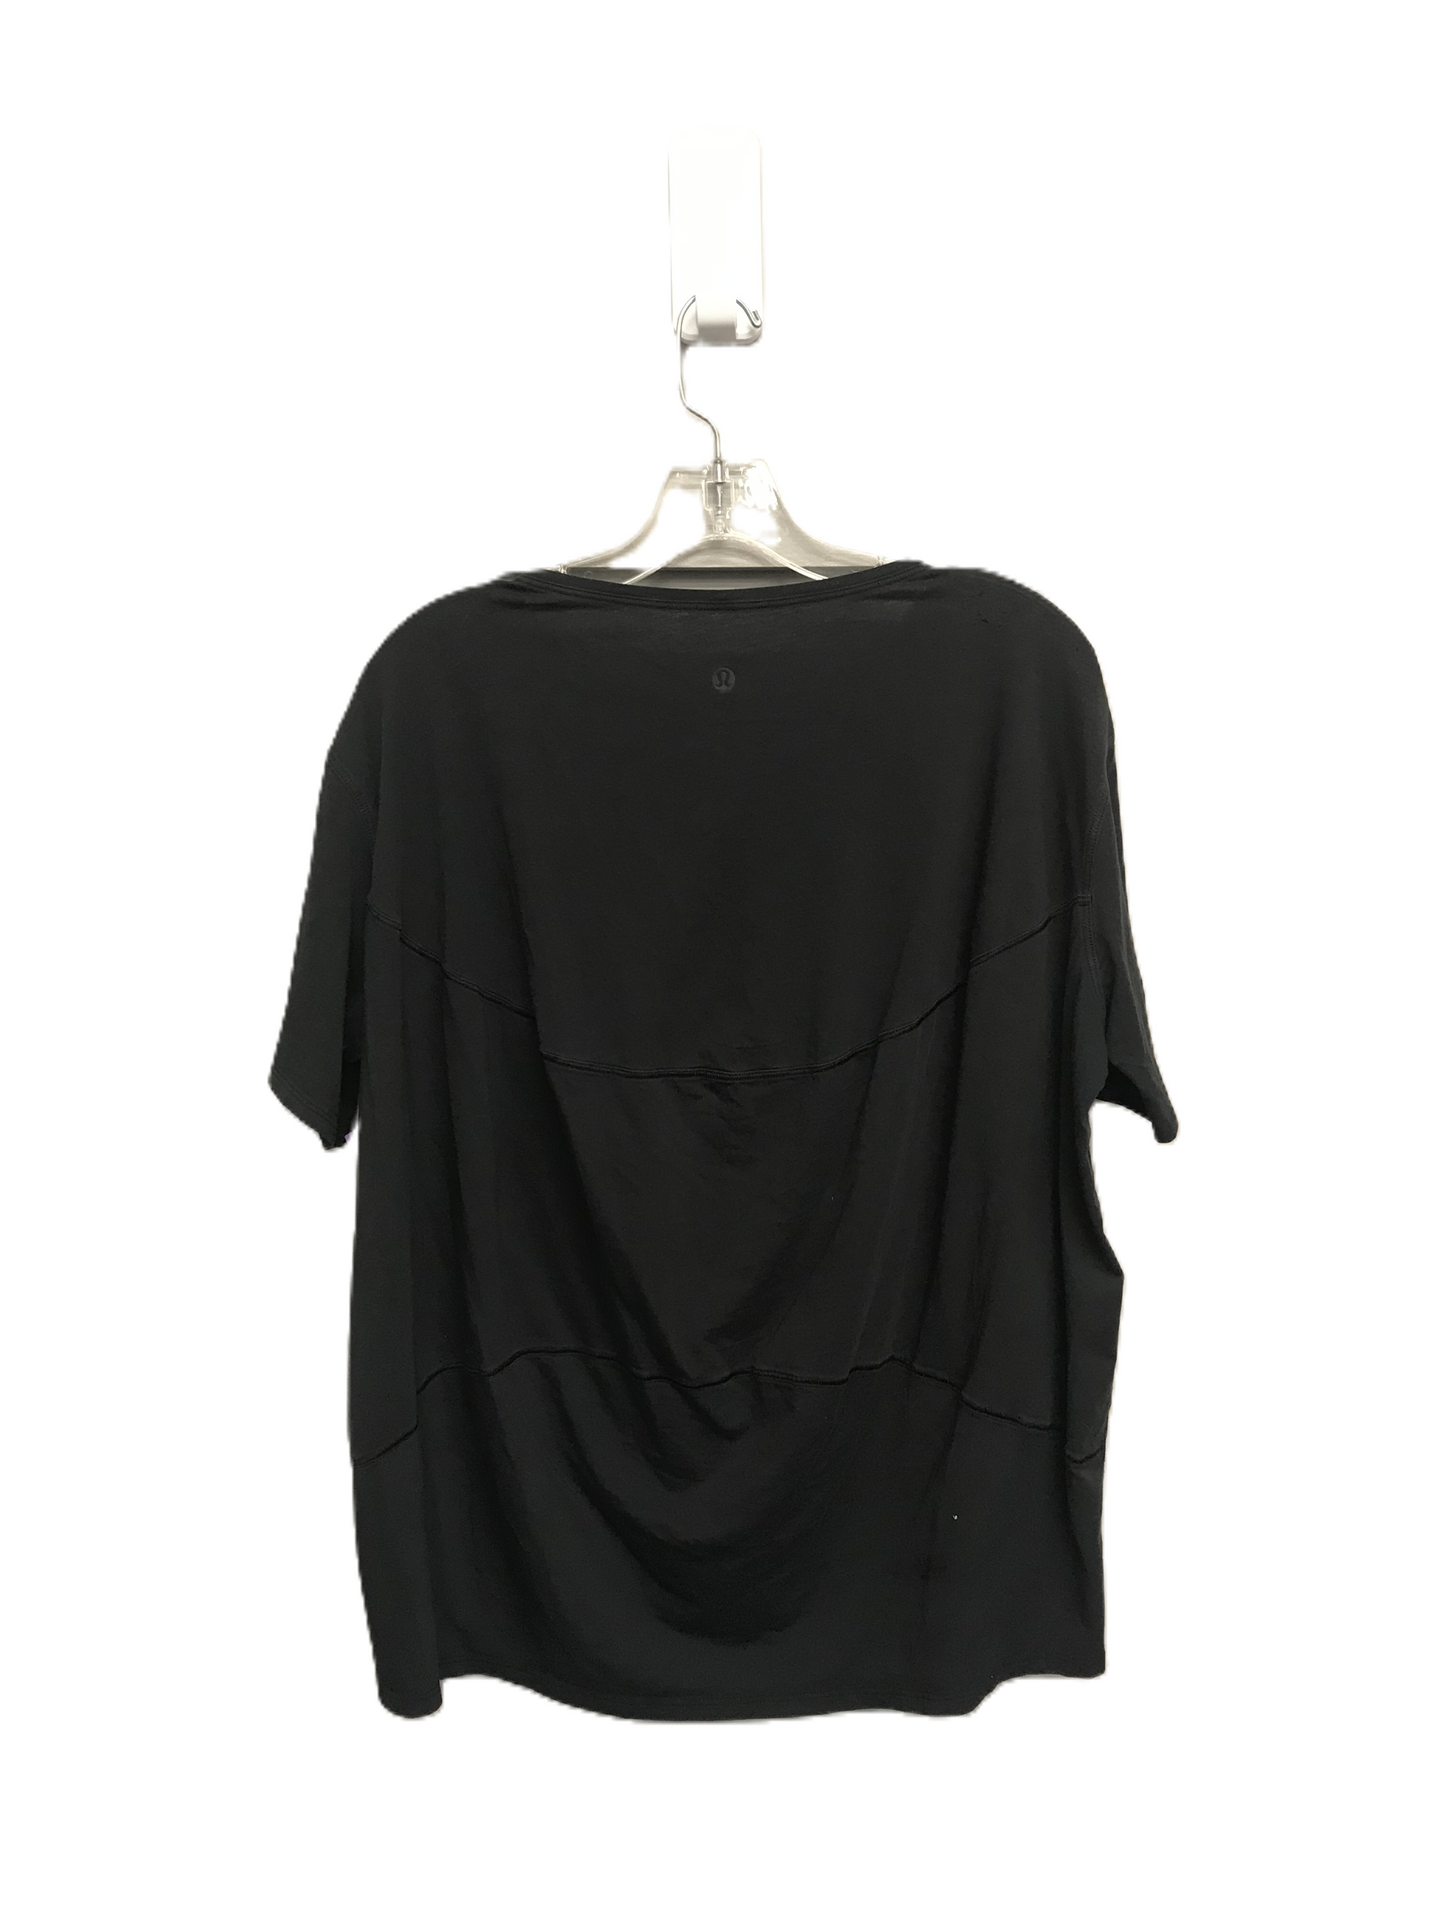 Black Athletic Top Short Sleeve By Lululemon, Size: L